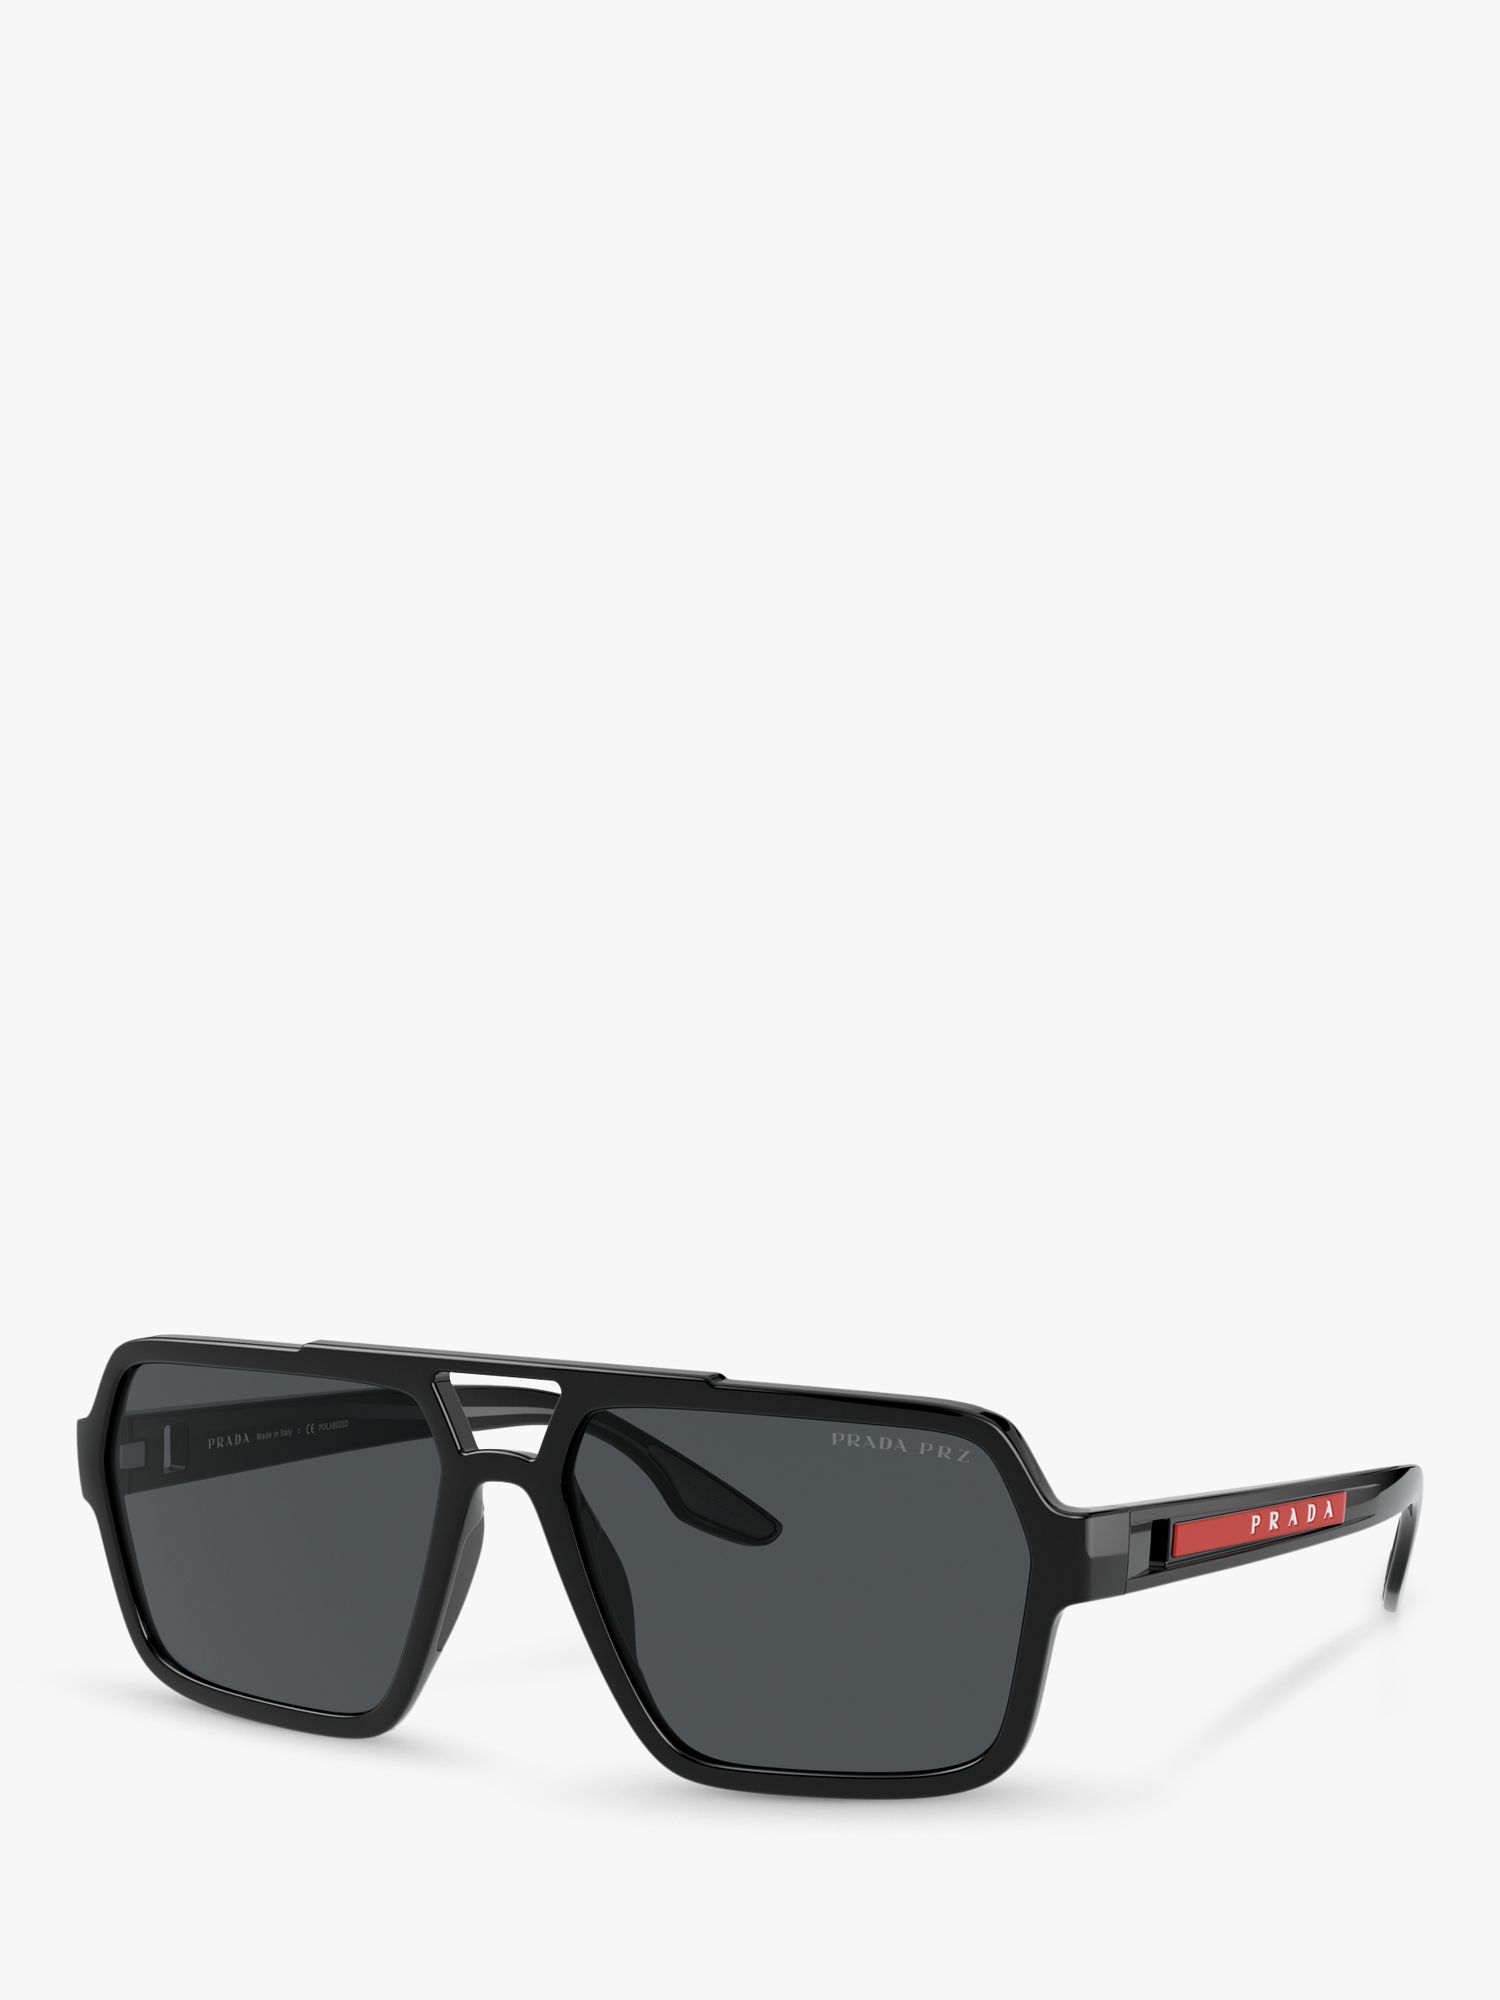 Prada PS 01XS Men's Polarised Rectangular Sunglasses, Black/Grey at John Lewis & Partners